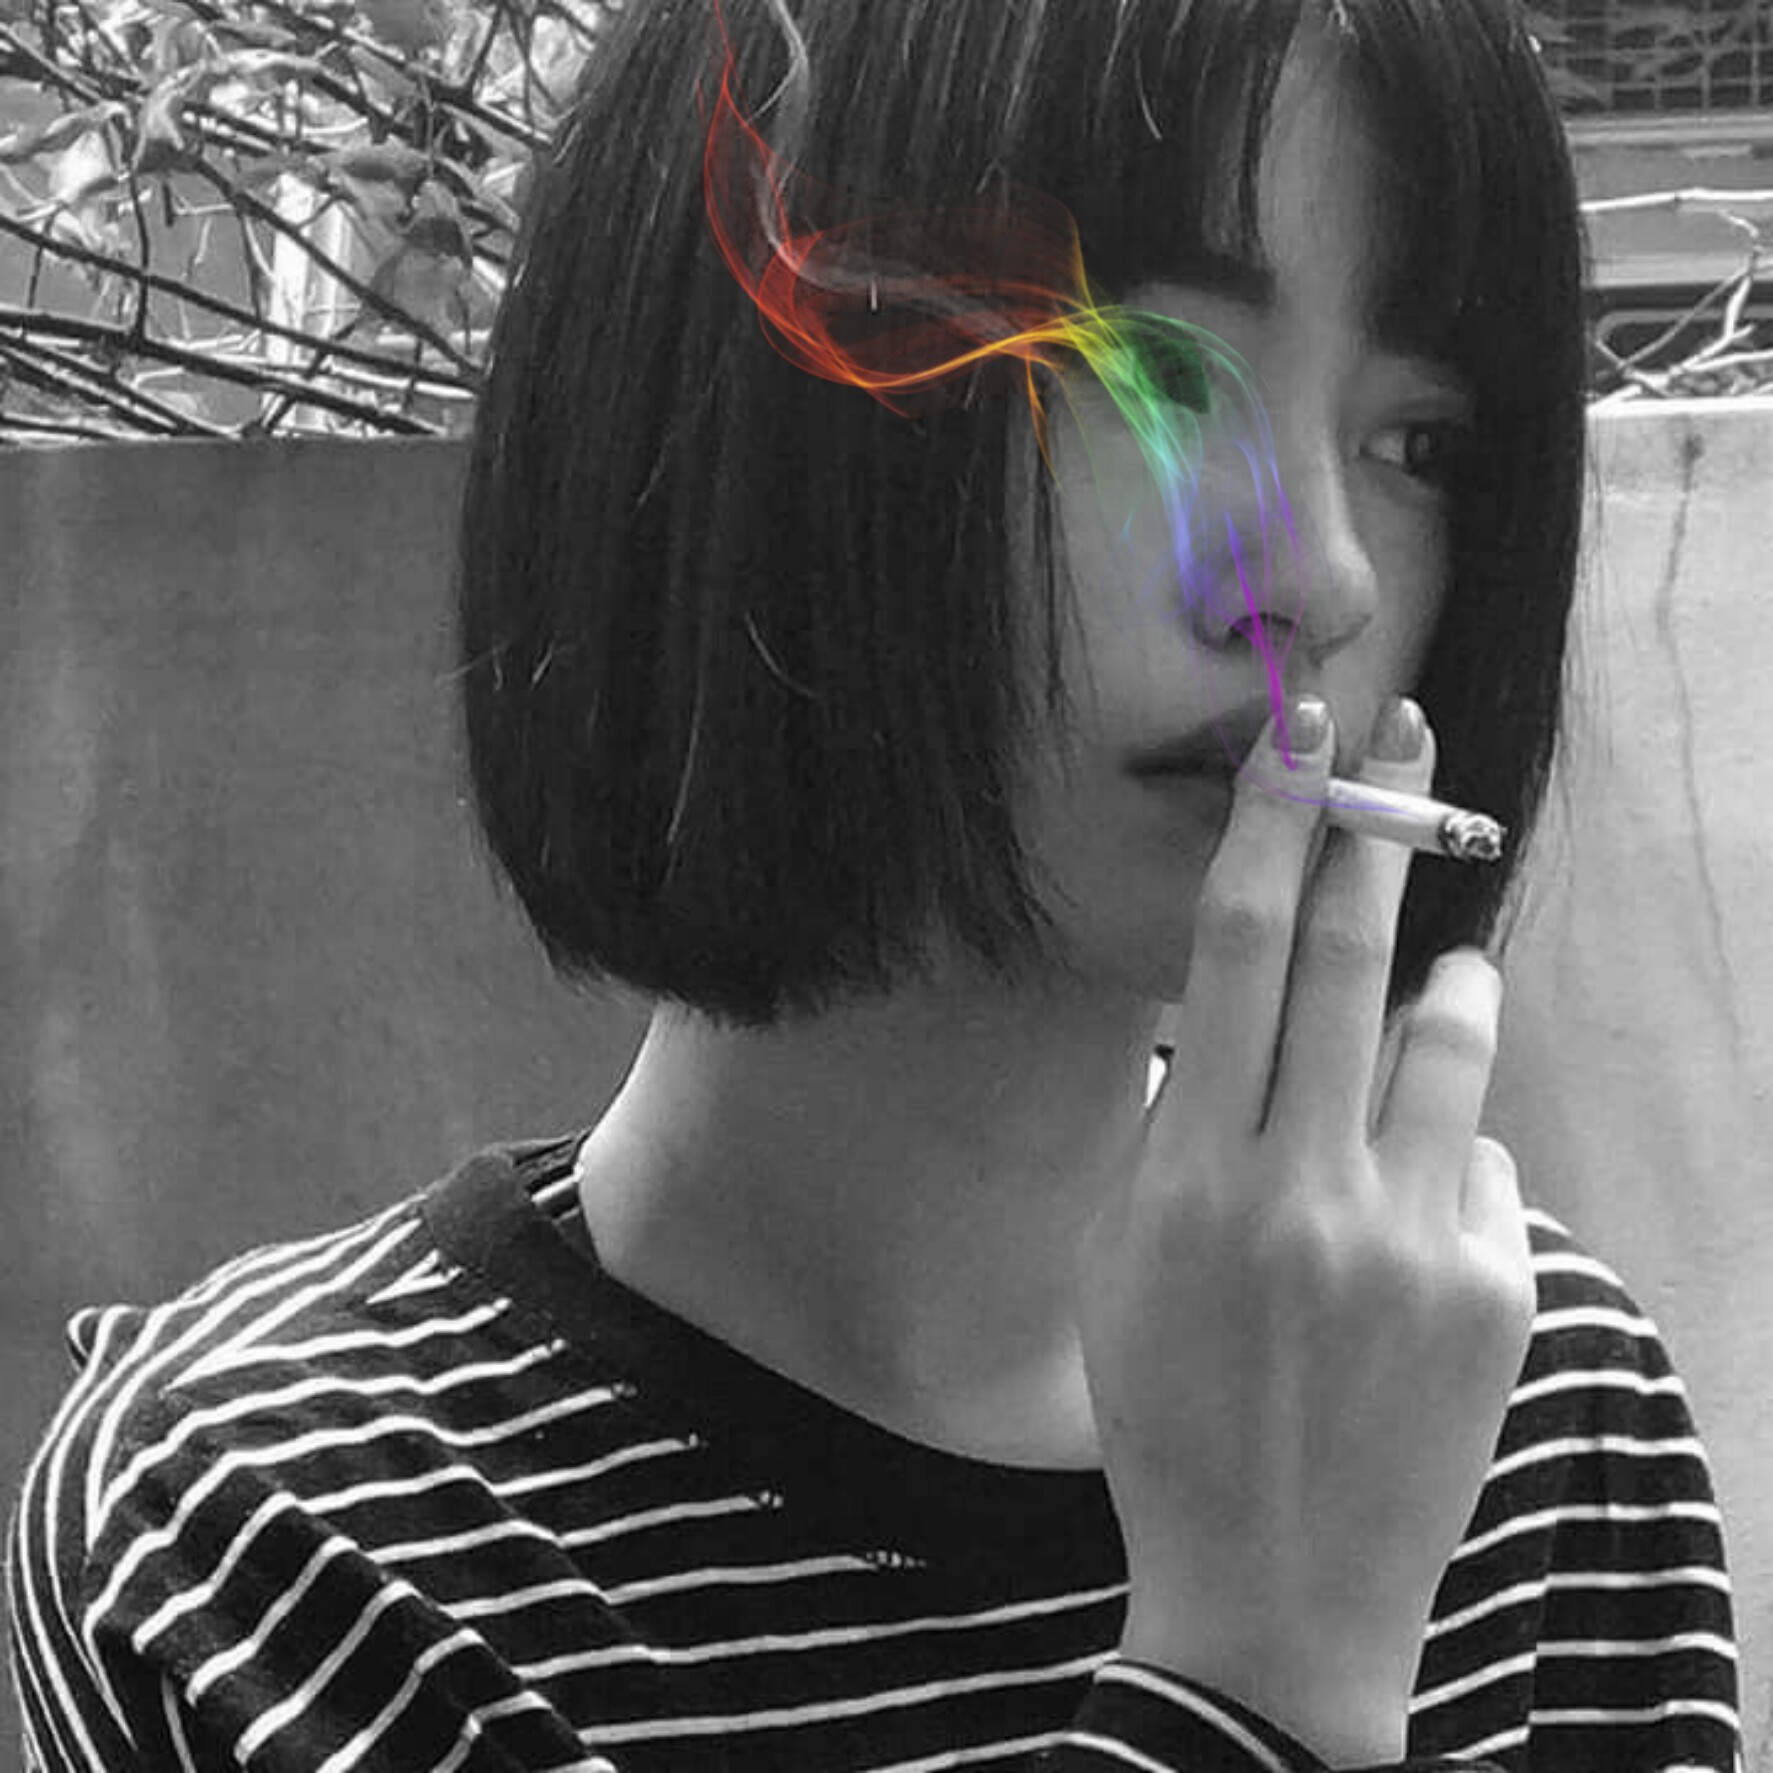 rainbow smoke cigarette image by @a_suspicious_plant 